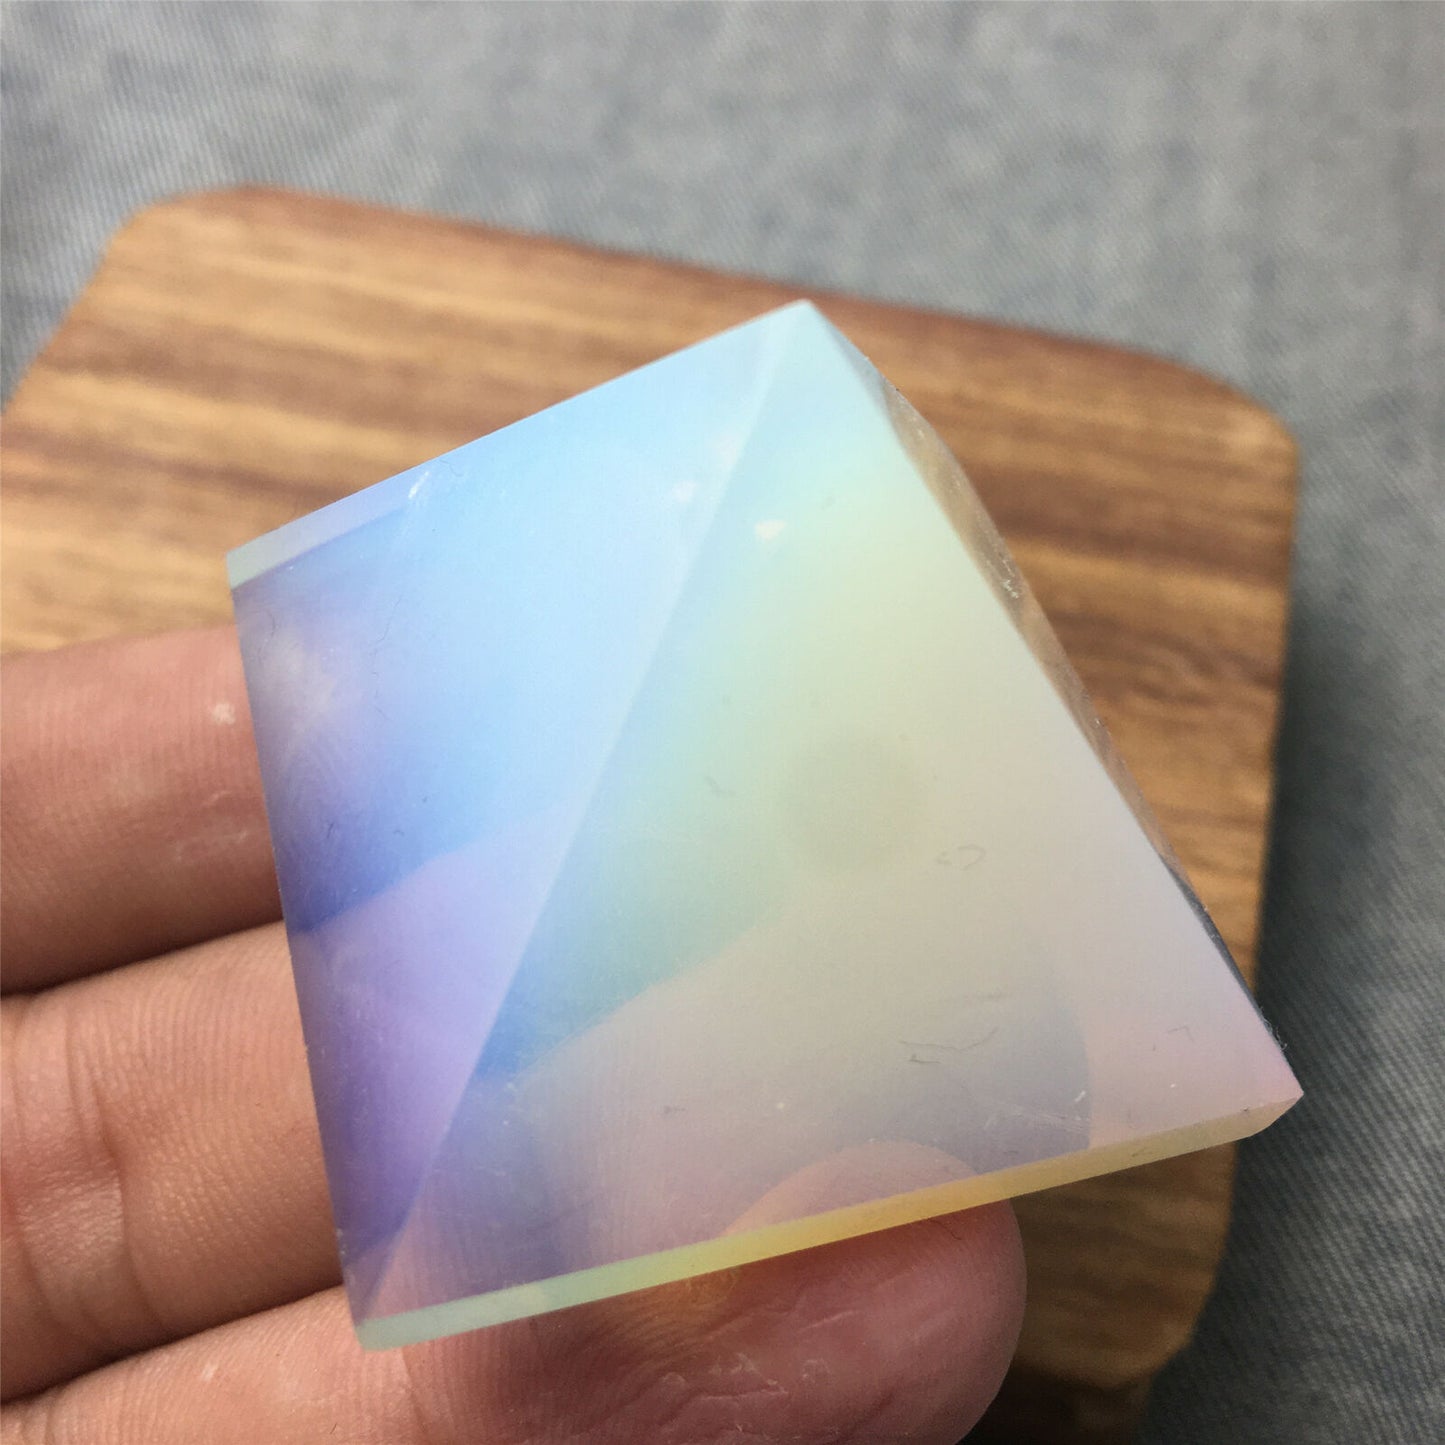 4cm Natural Stone White Opal Pyramid - Omamoristone お守り石